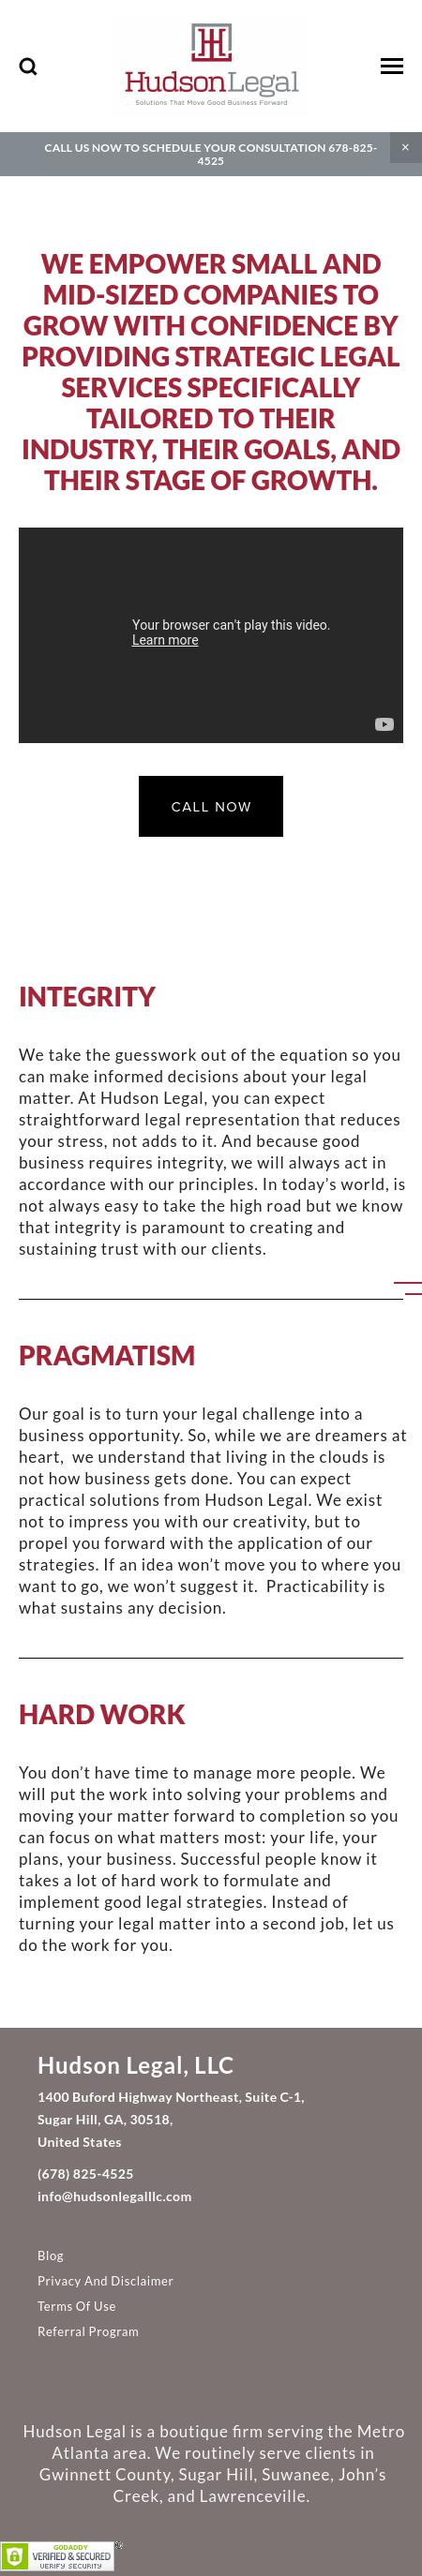 Hudson Legal - Lawrenceville GA Lawyers